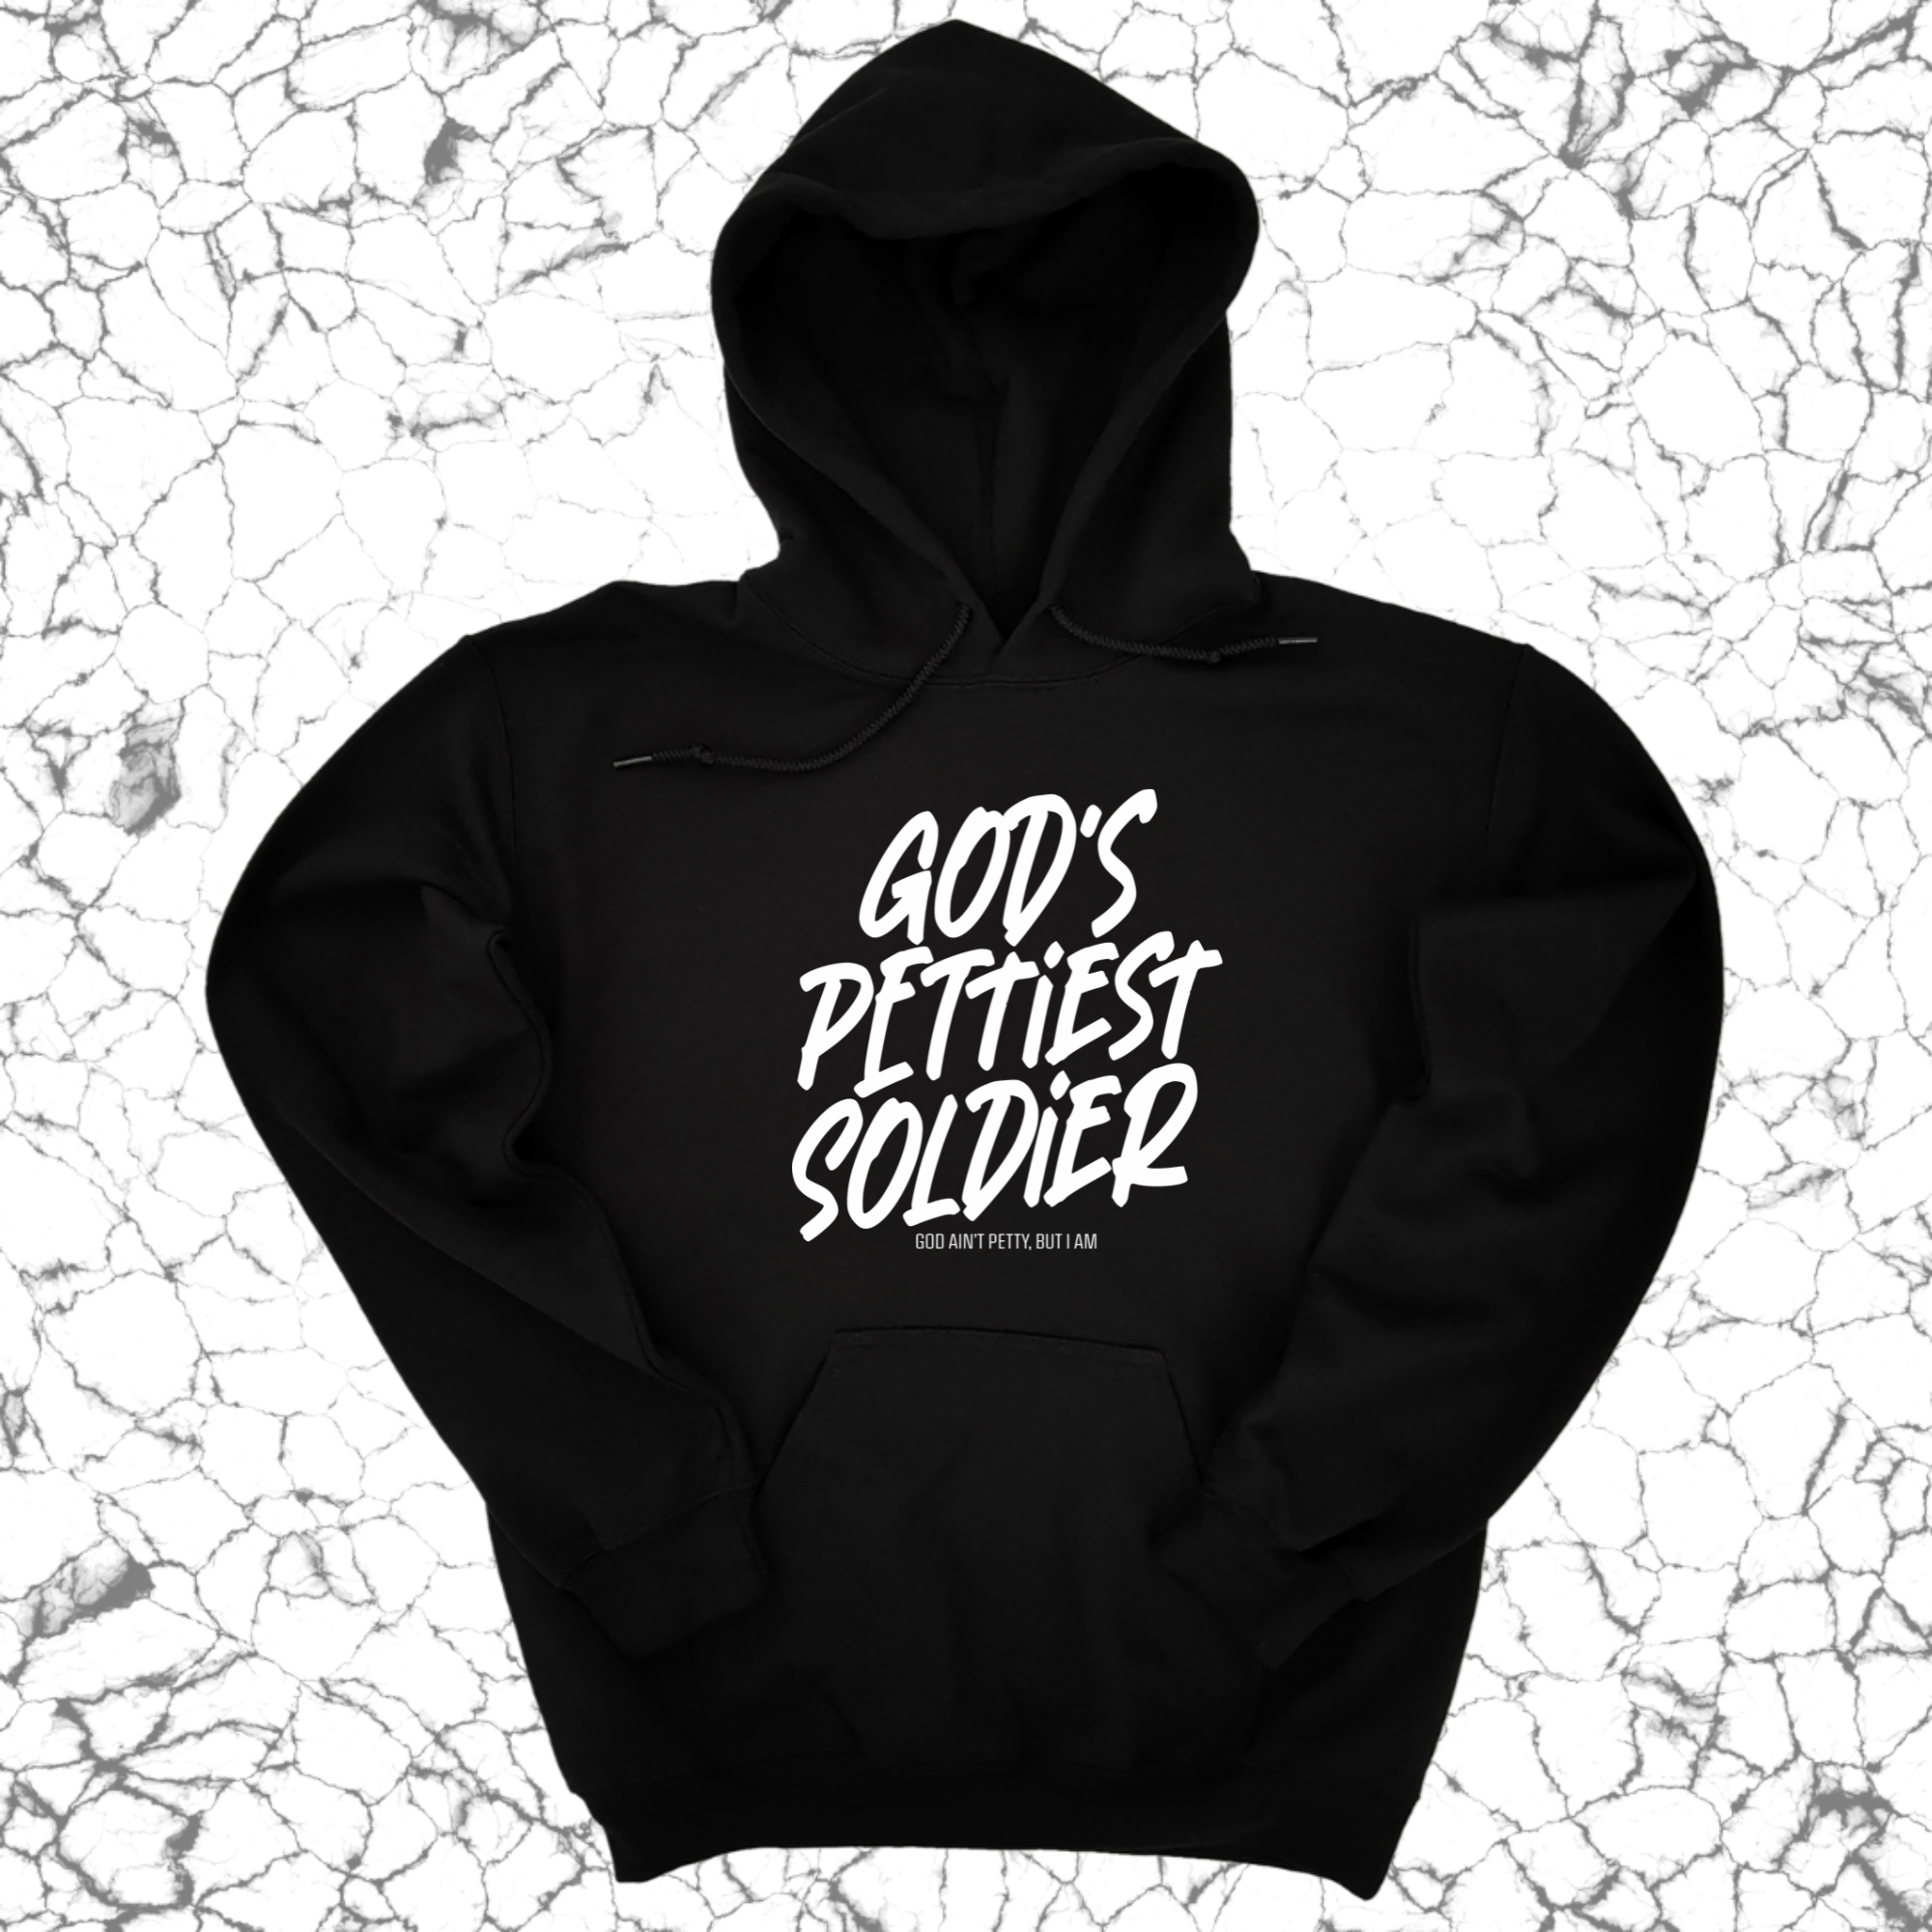 God's Pettiest Soldier Unisex Hoodie-Hoodie-The Original God Ain't Petty But I Am